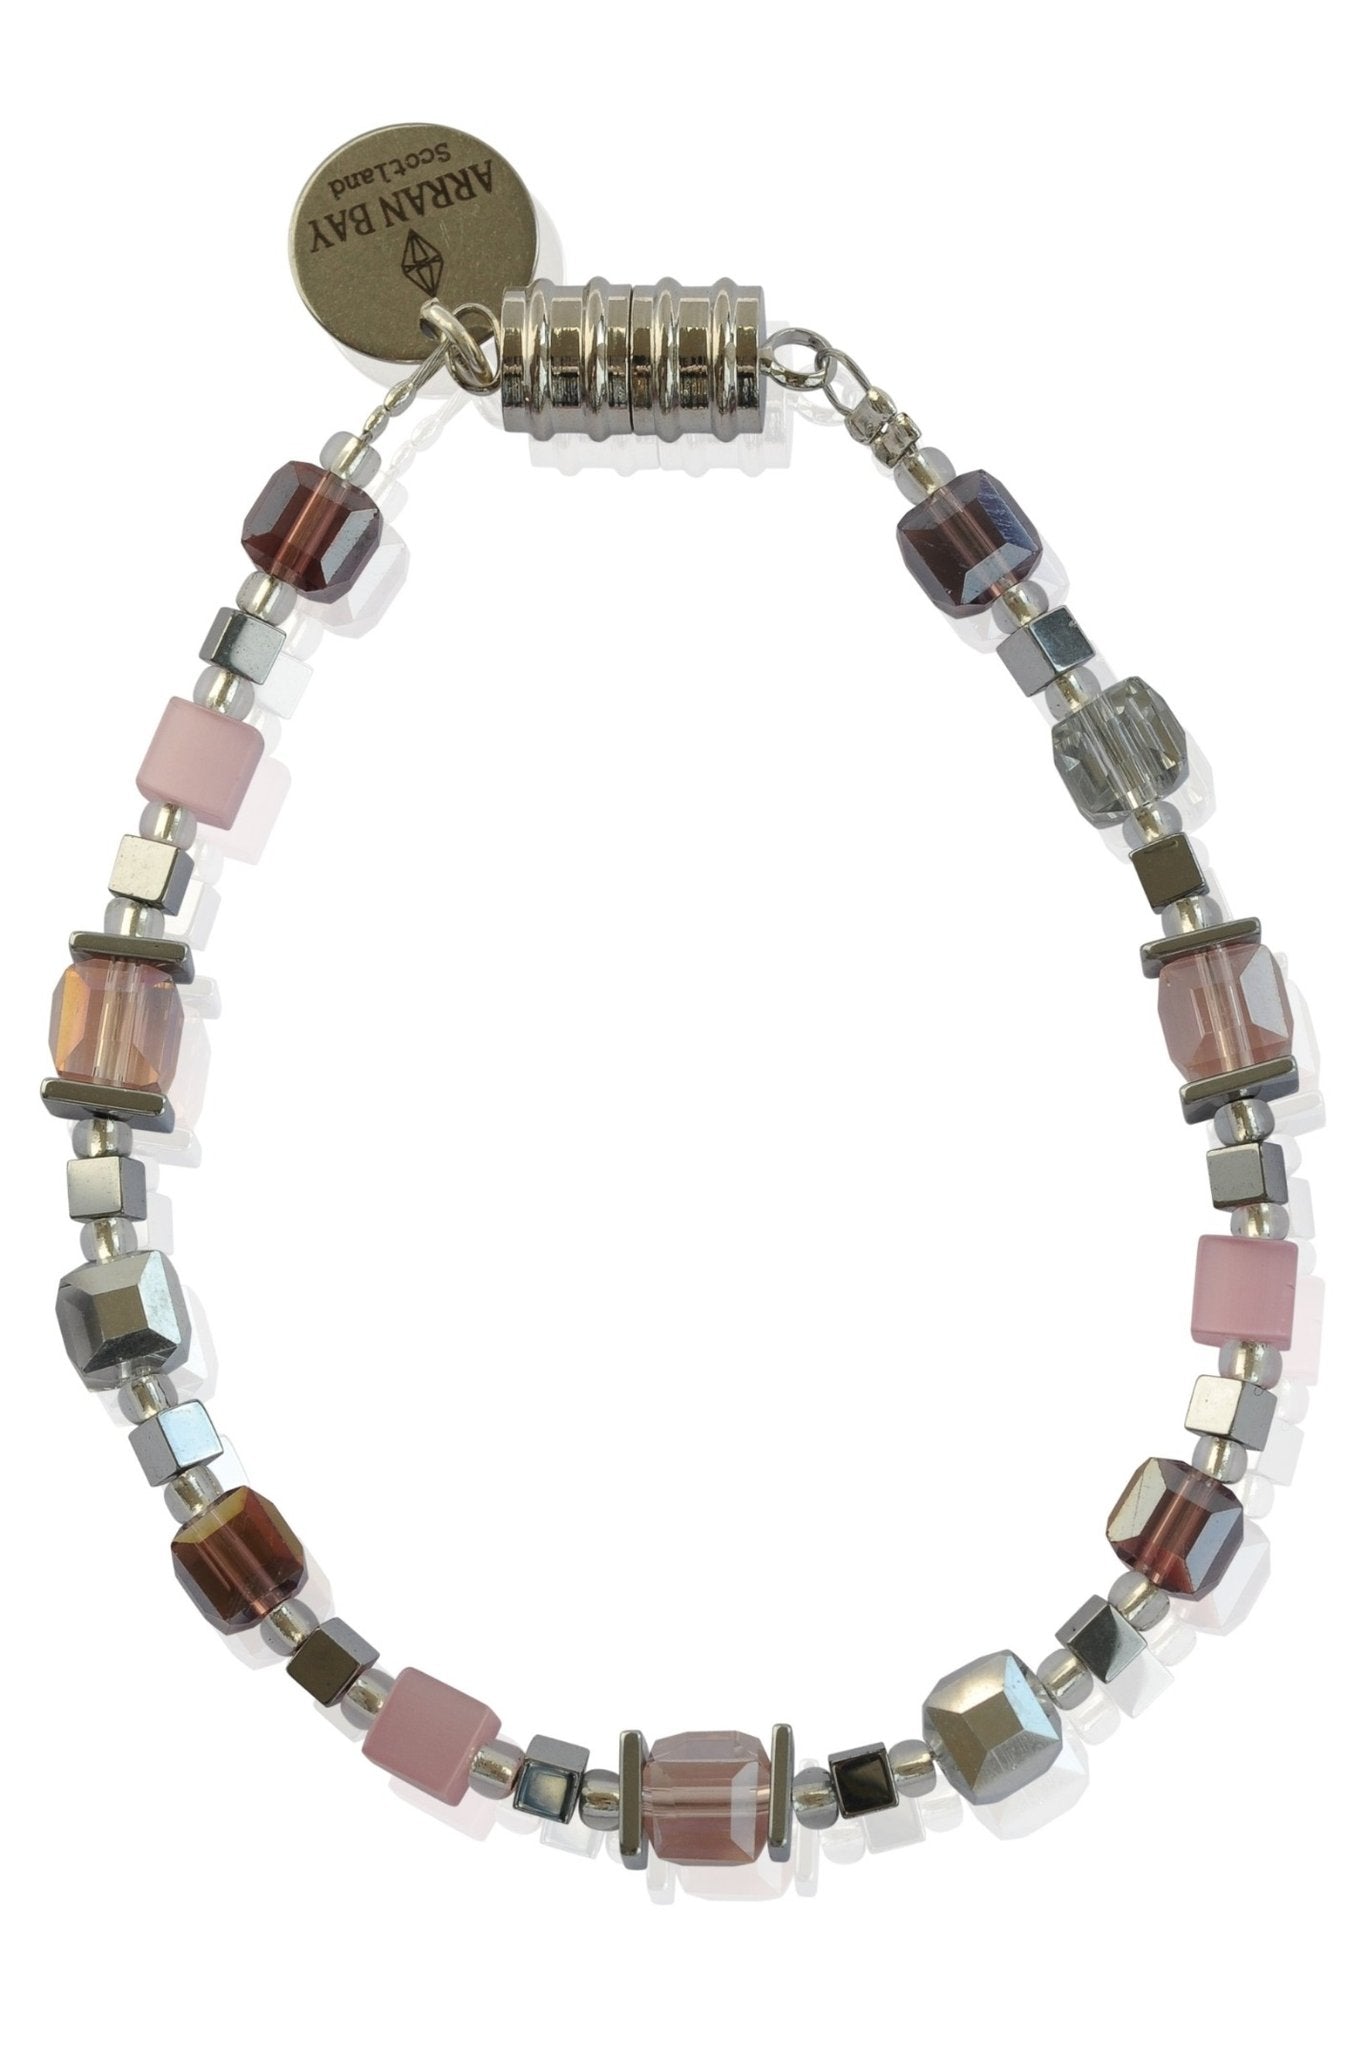 Pink and Lilac Glass Bracelet - The Nancy Smillie Shop - Art, Jewellery & Designer Gifts Glasgow